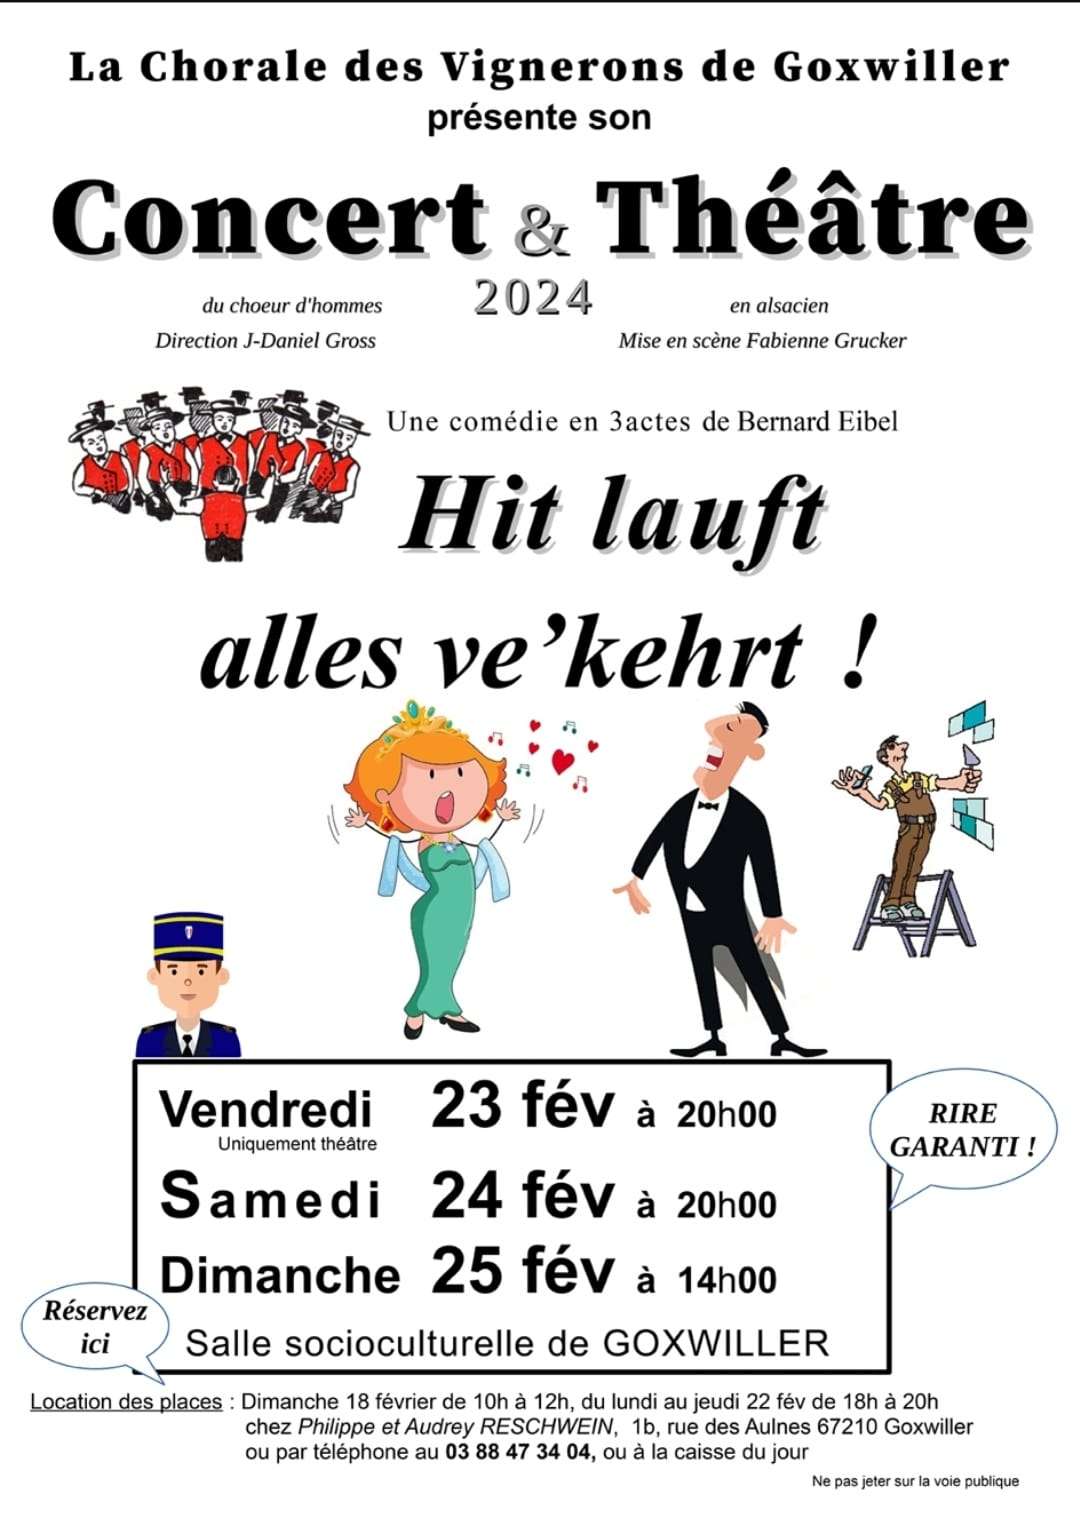 chorale_des_vignerons_de_goxwiller_concert_theatre.jpg